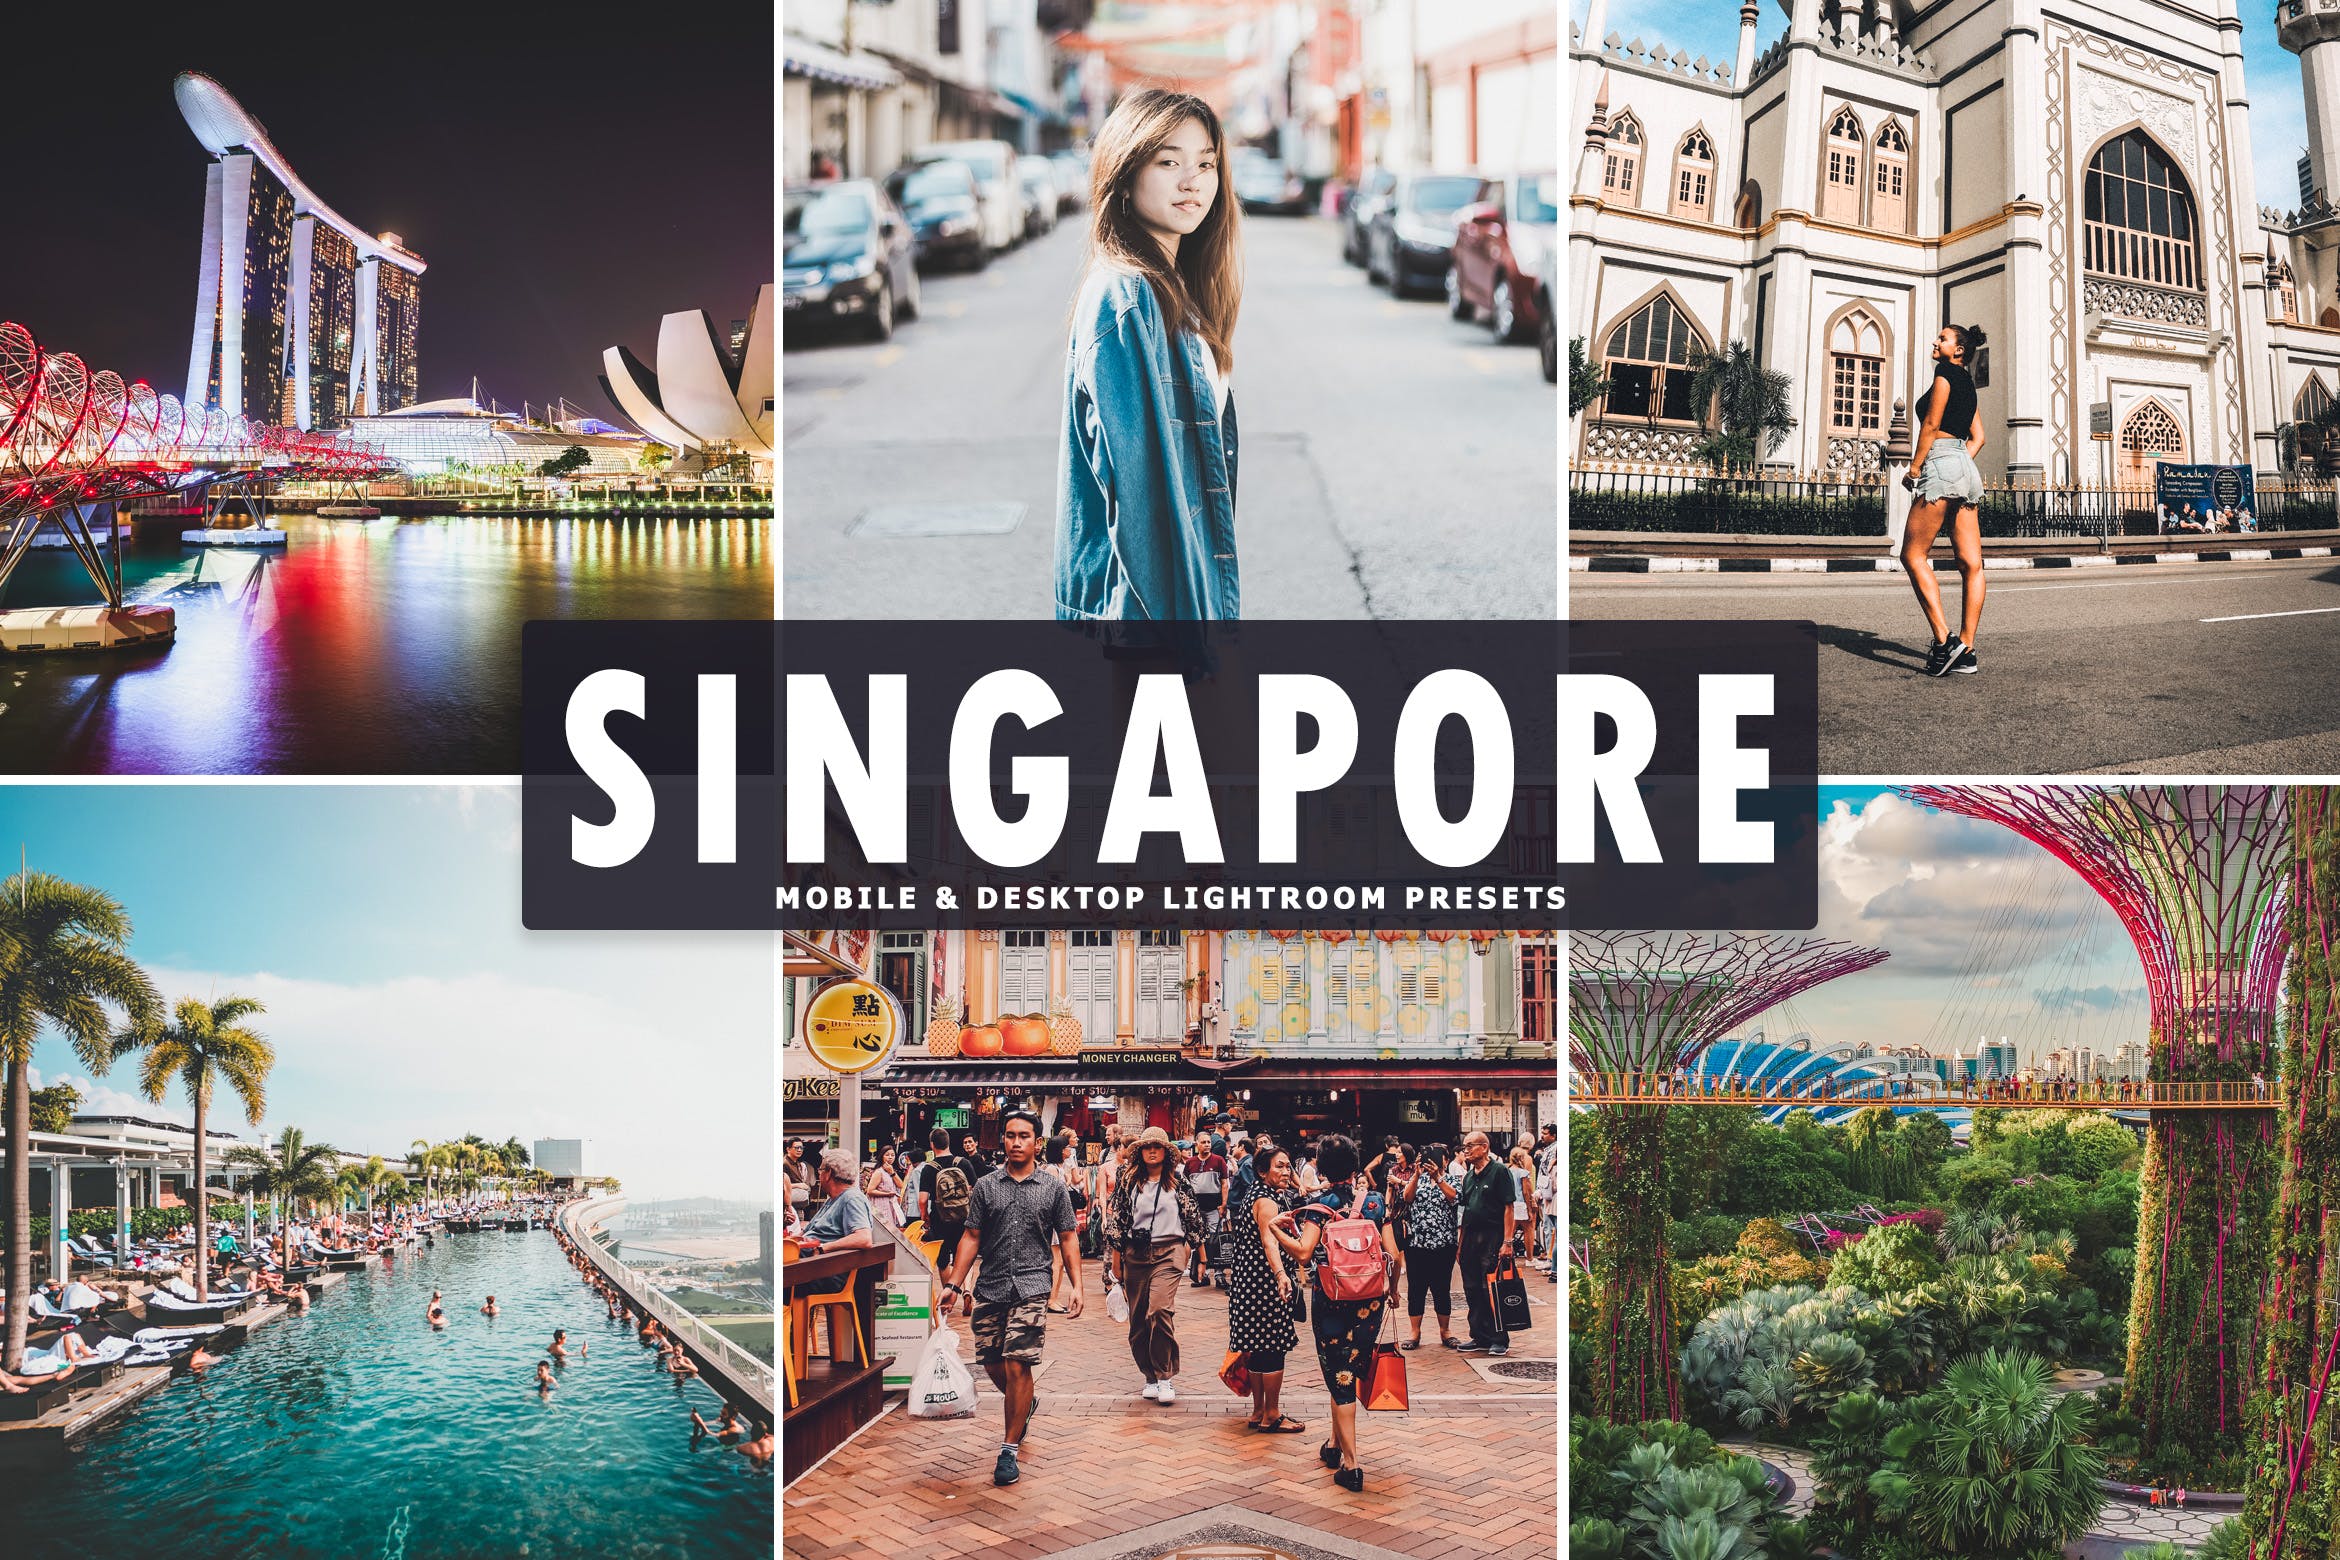 新加坡旅游照片后期处理Lightroom调色预设 Singapore Mobile & Desktop Lightroom Presets插图